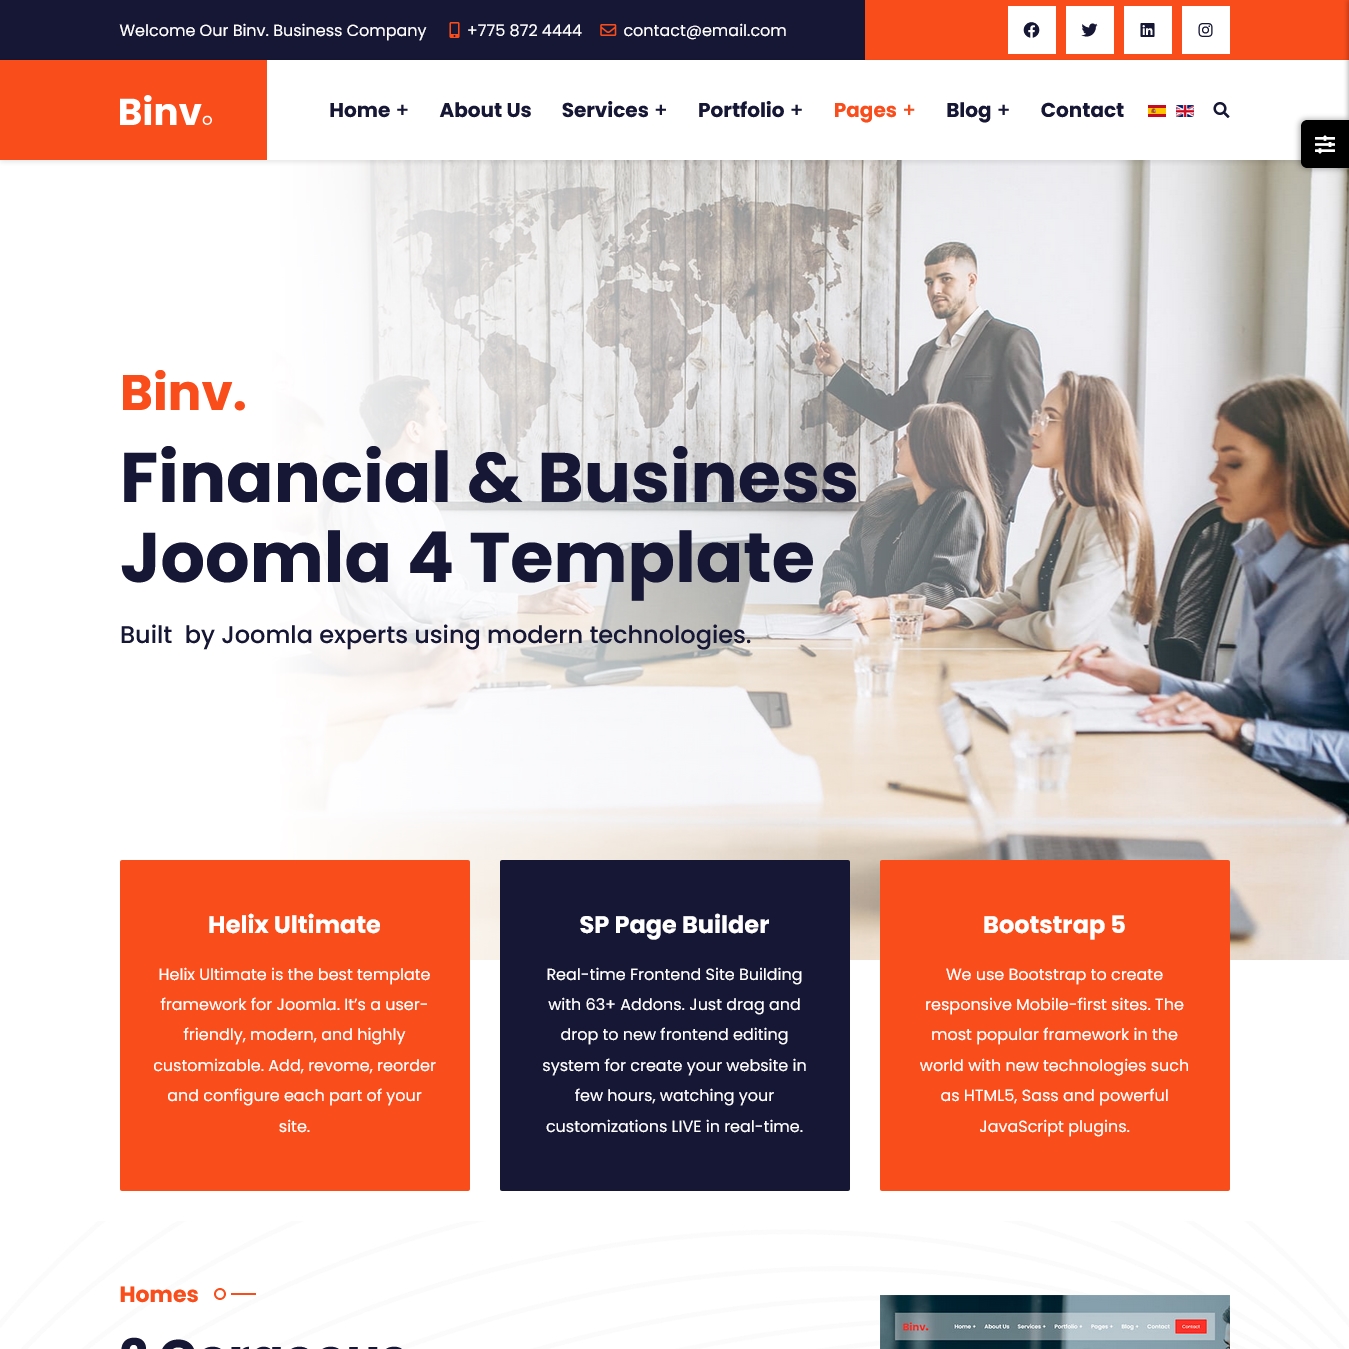 Binv Financial & Business Joomla 4 Template